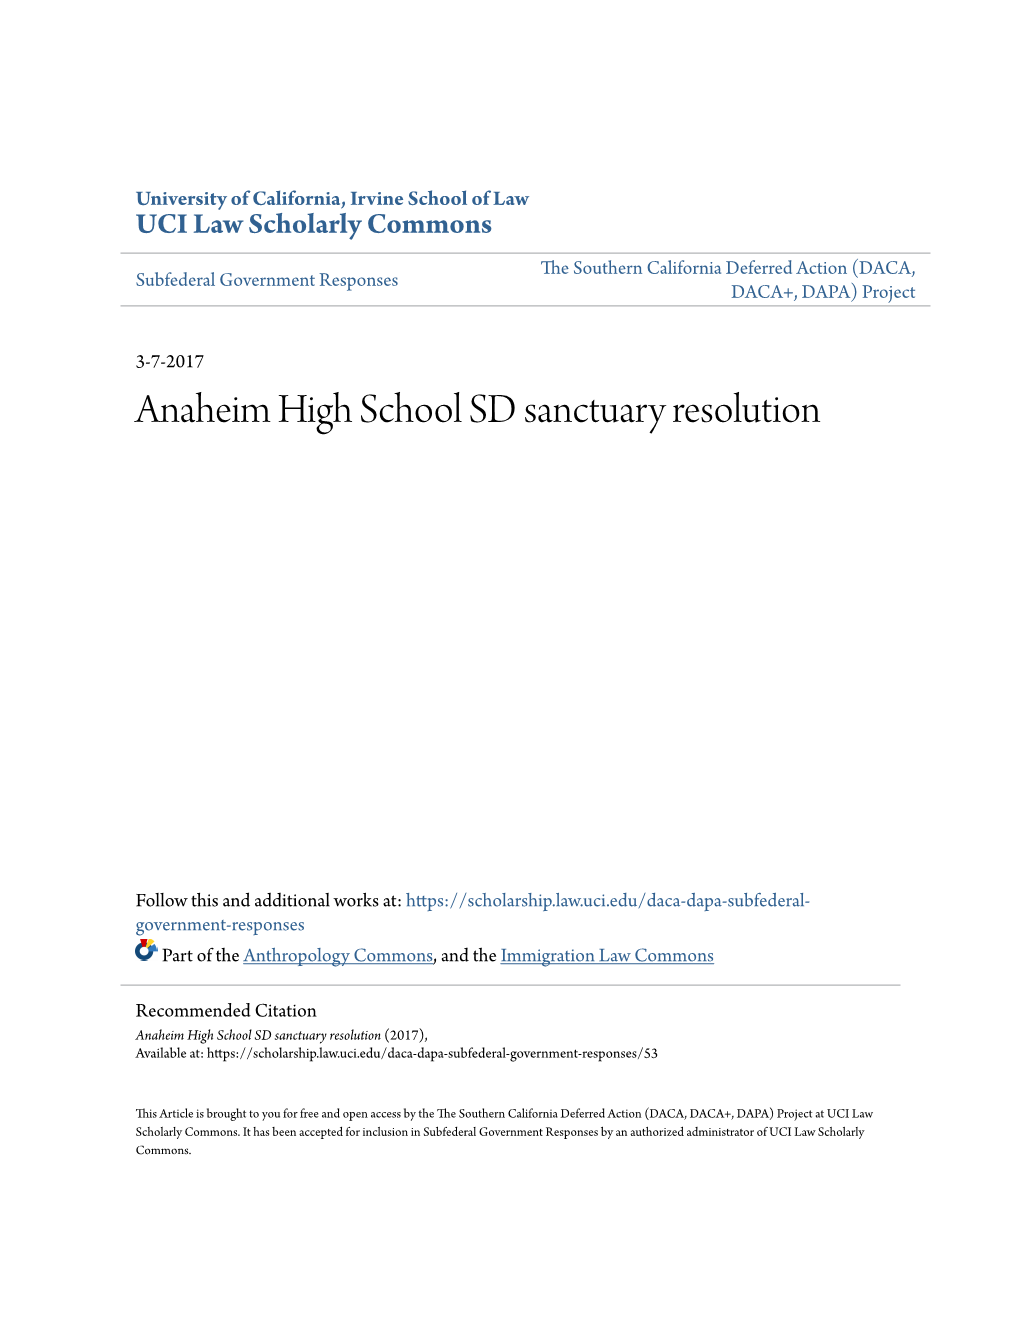 Anaheim High School SD Sanctuary Resolution